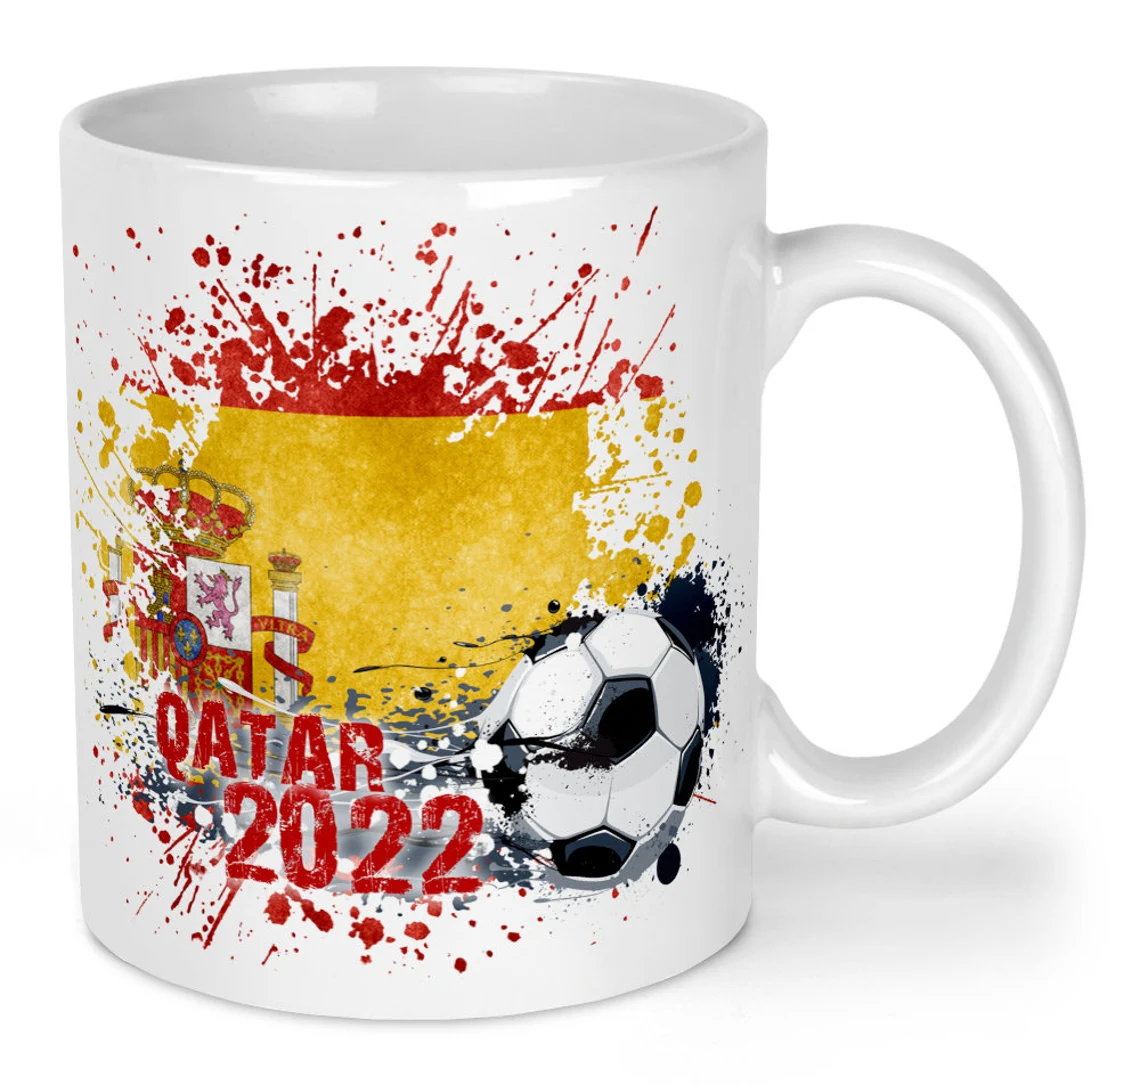 Uruguay Qatar 2022 Fifa World Cup Coffee Mug Taza 11oz Soccer Futbol Ceramic